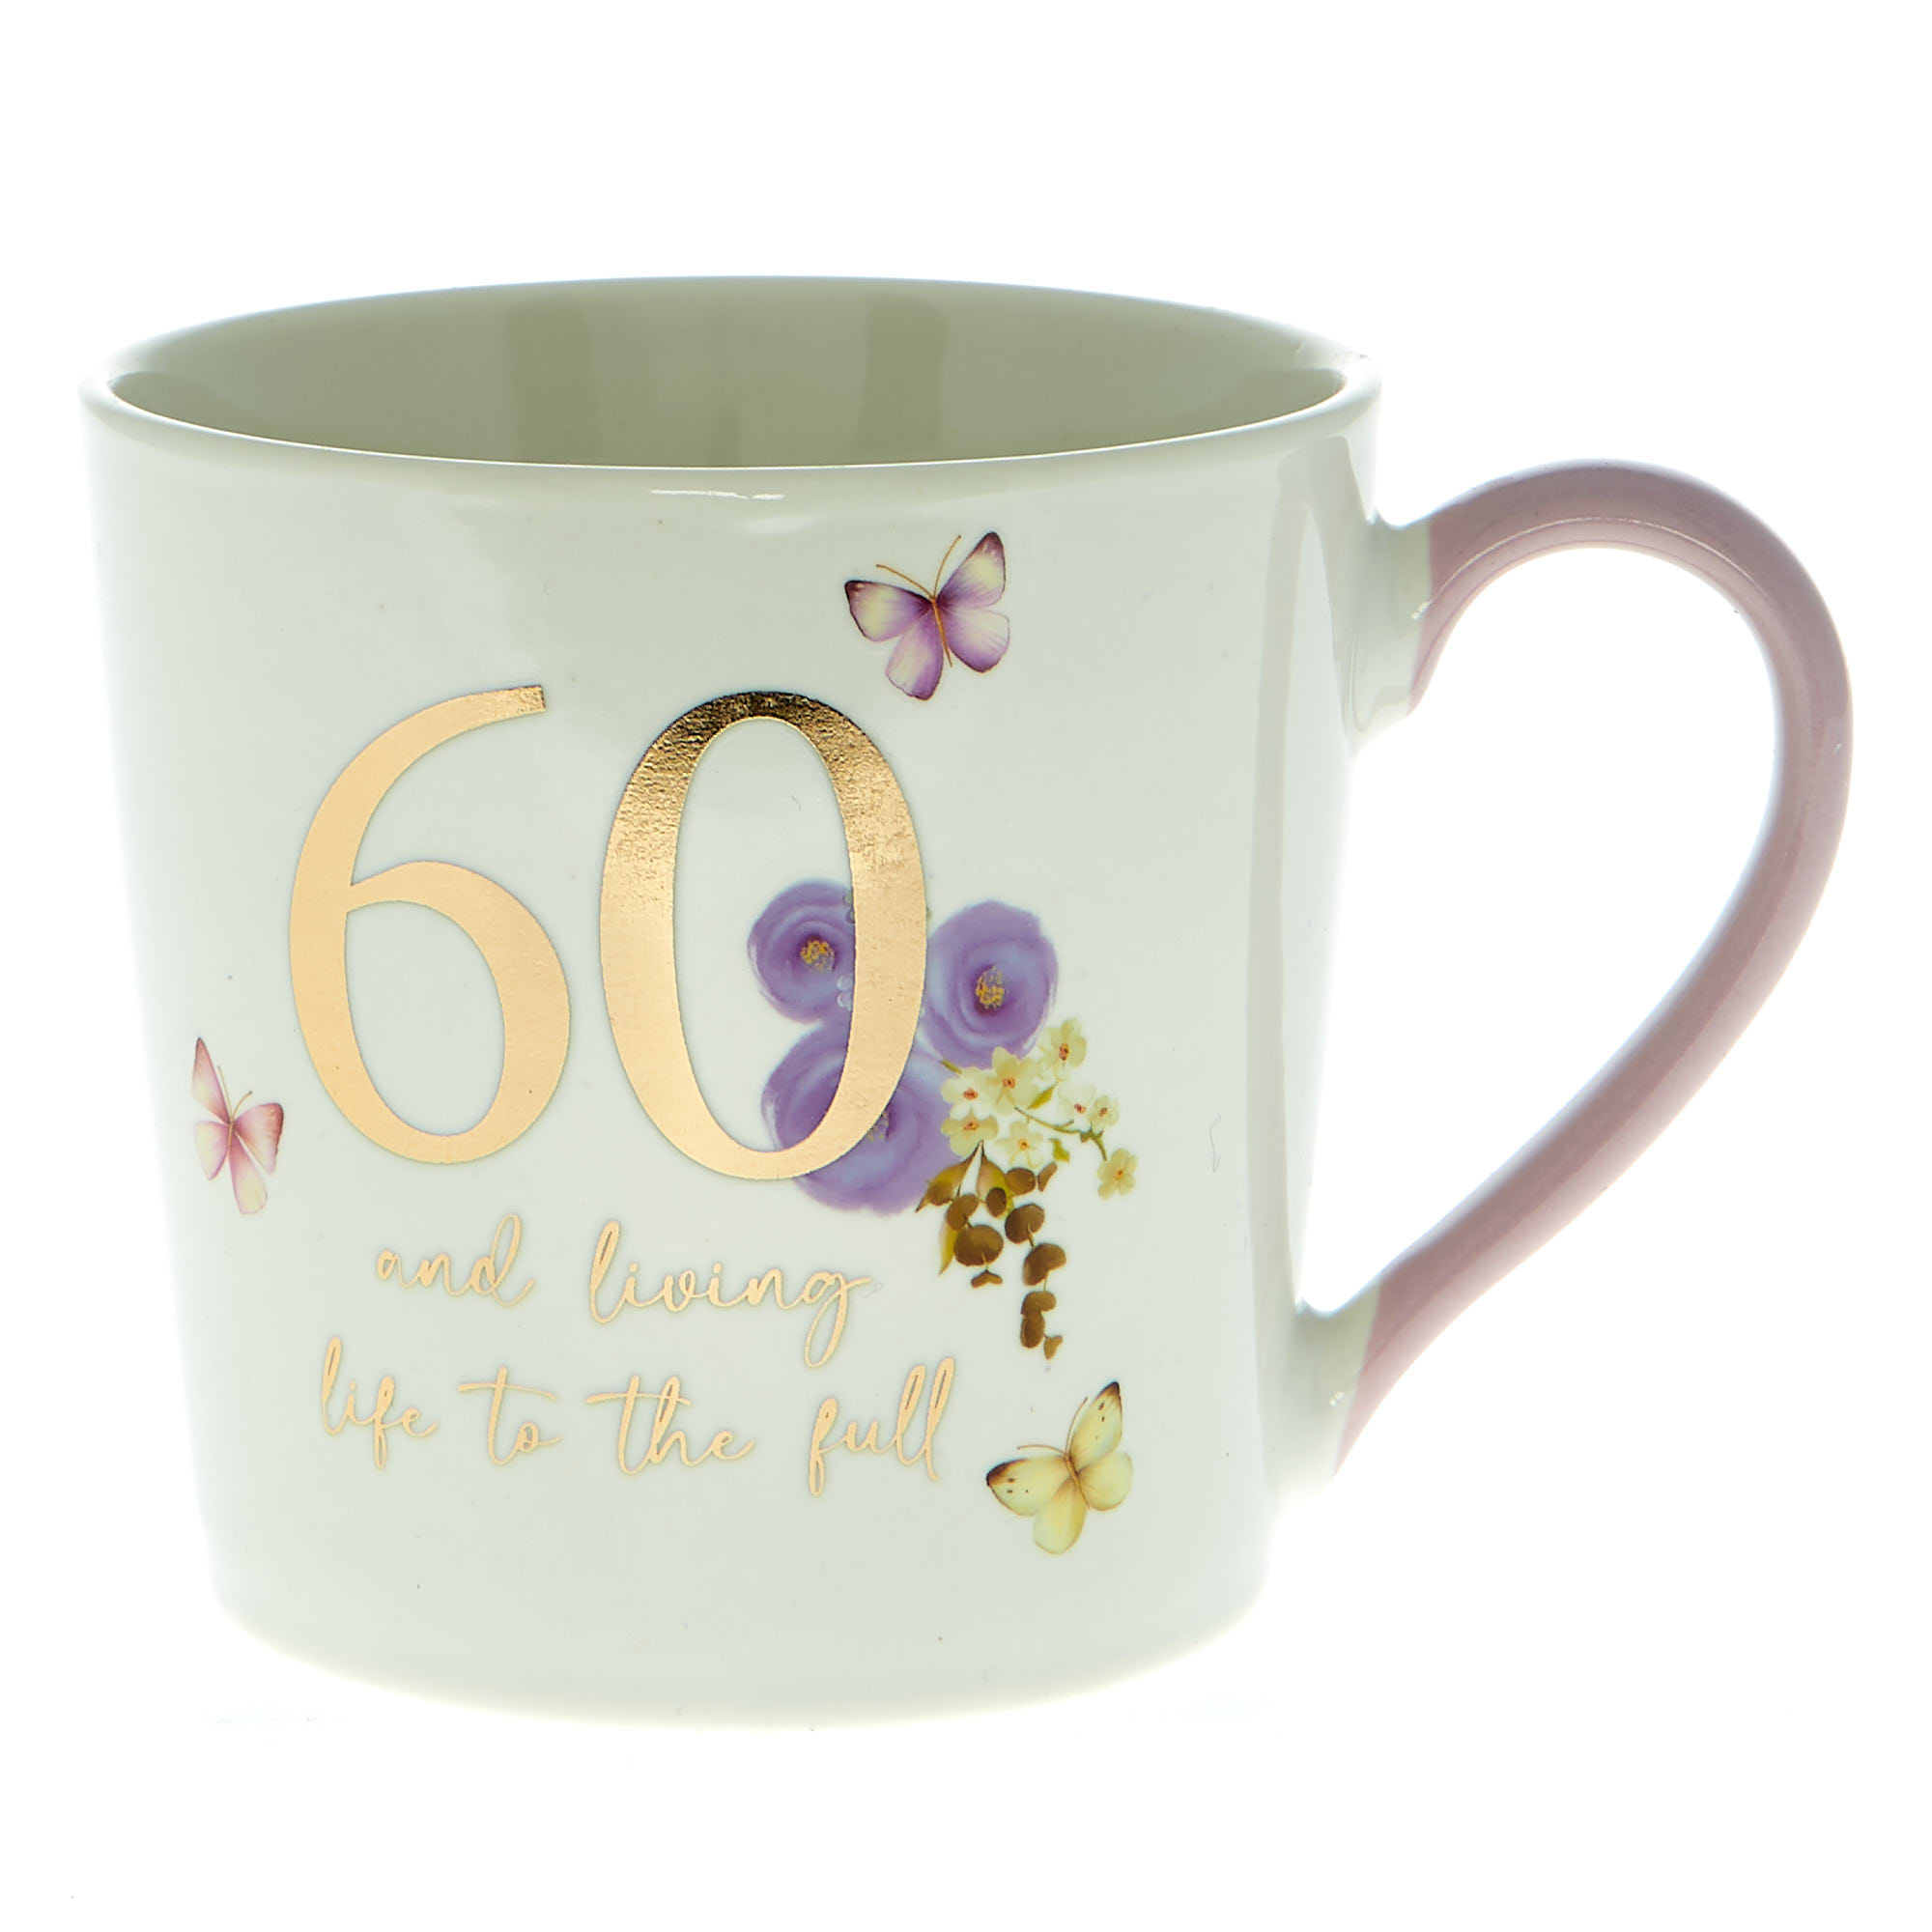 60 & Living Life To The Full Mug